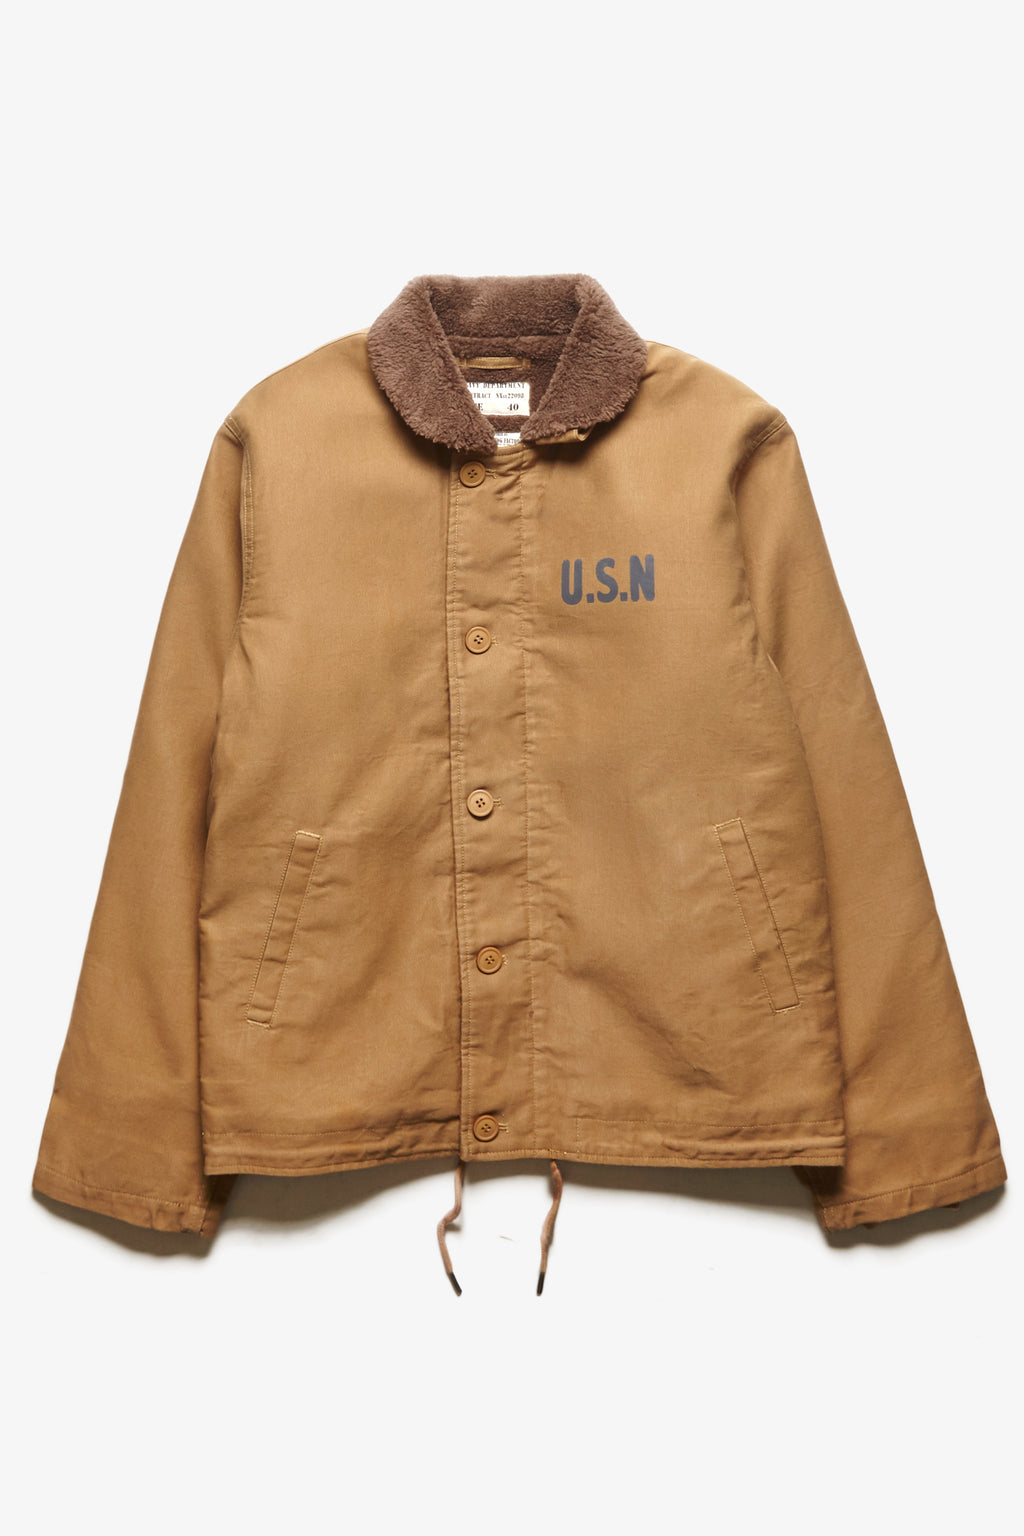 Deadstock - USN N1 Deck Jacket - Khaki